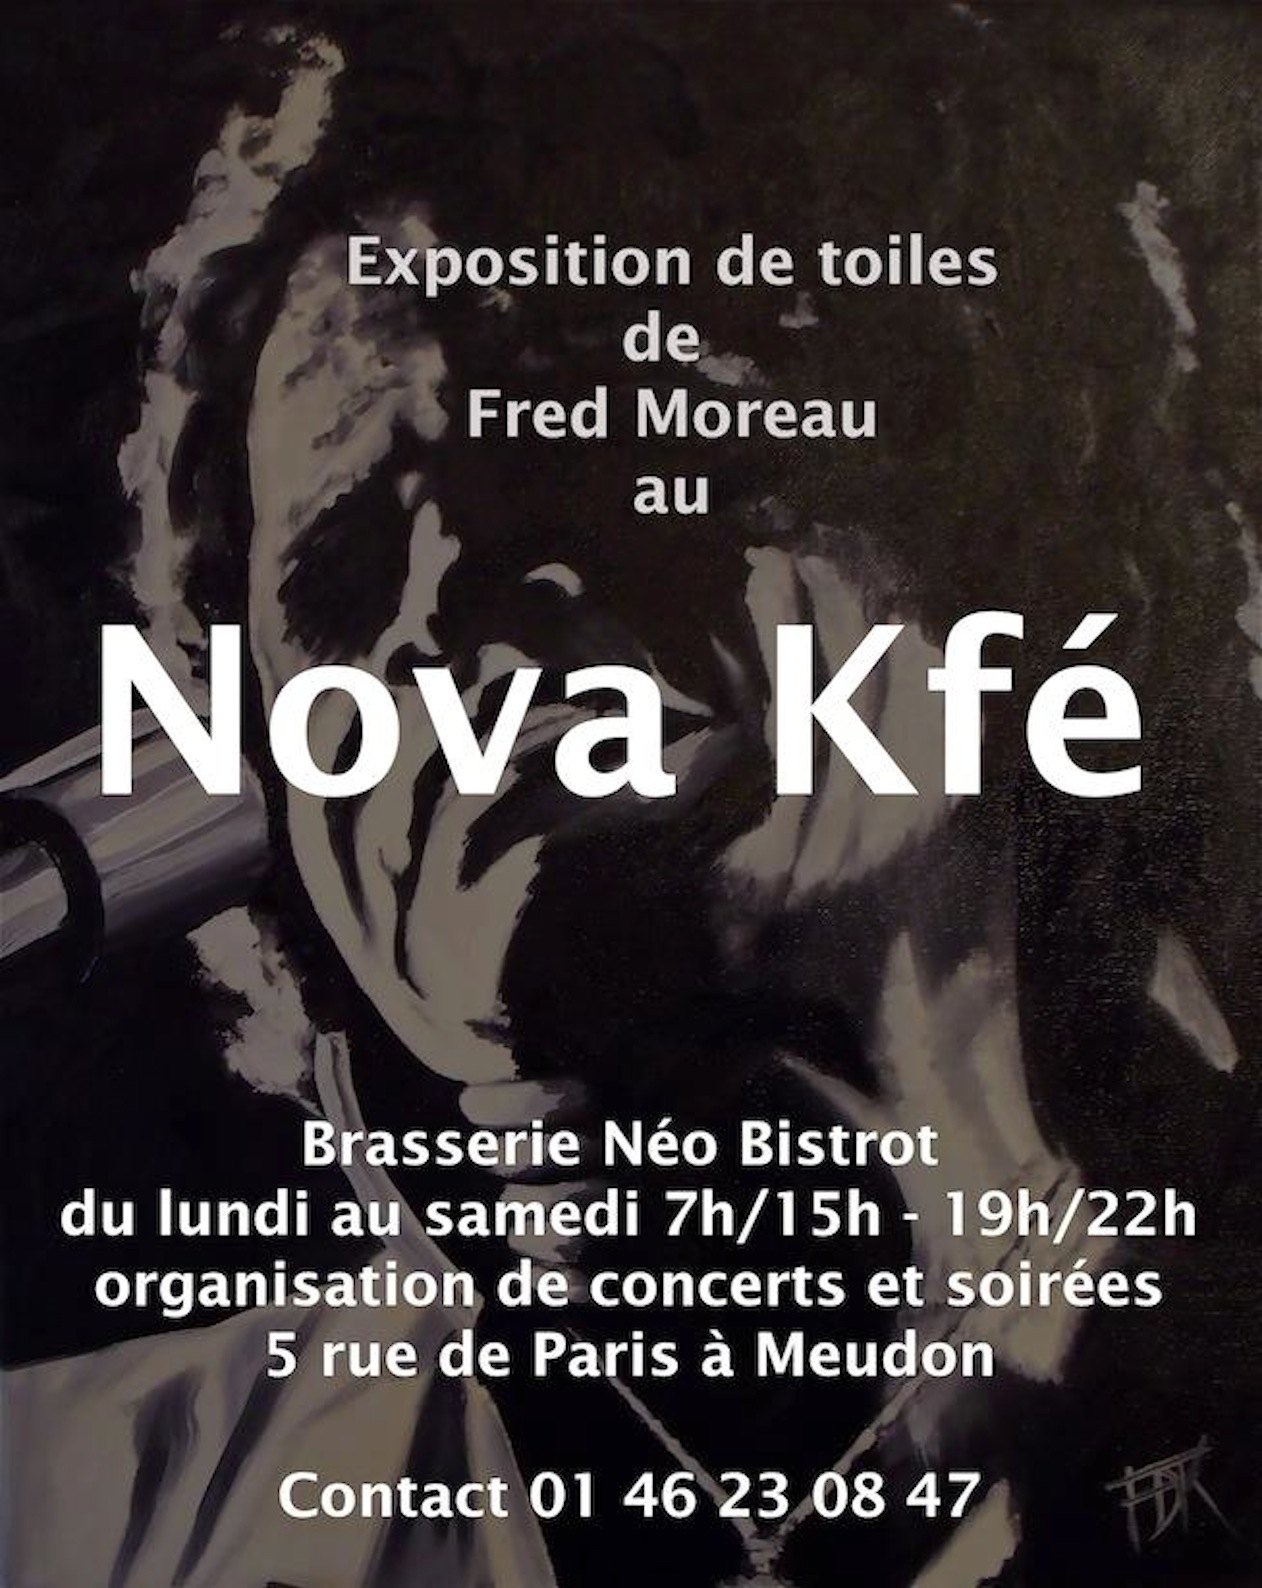 Fred Moreau artiste résident au Nova Kfé